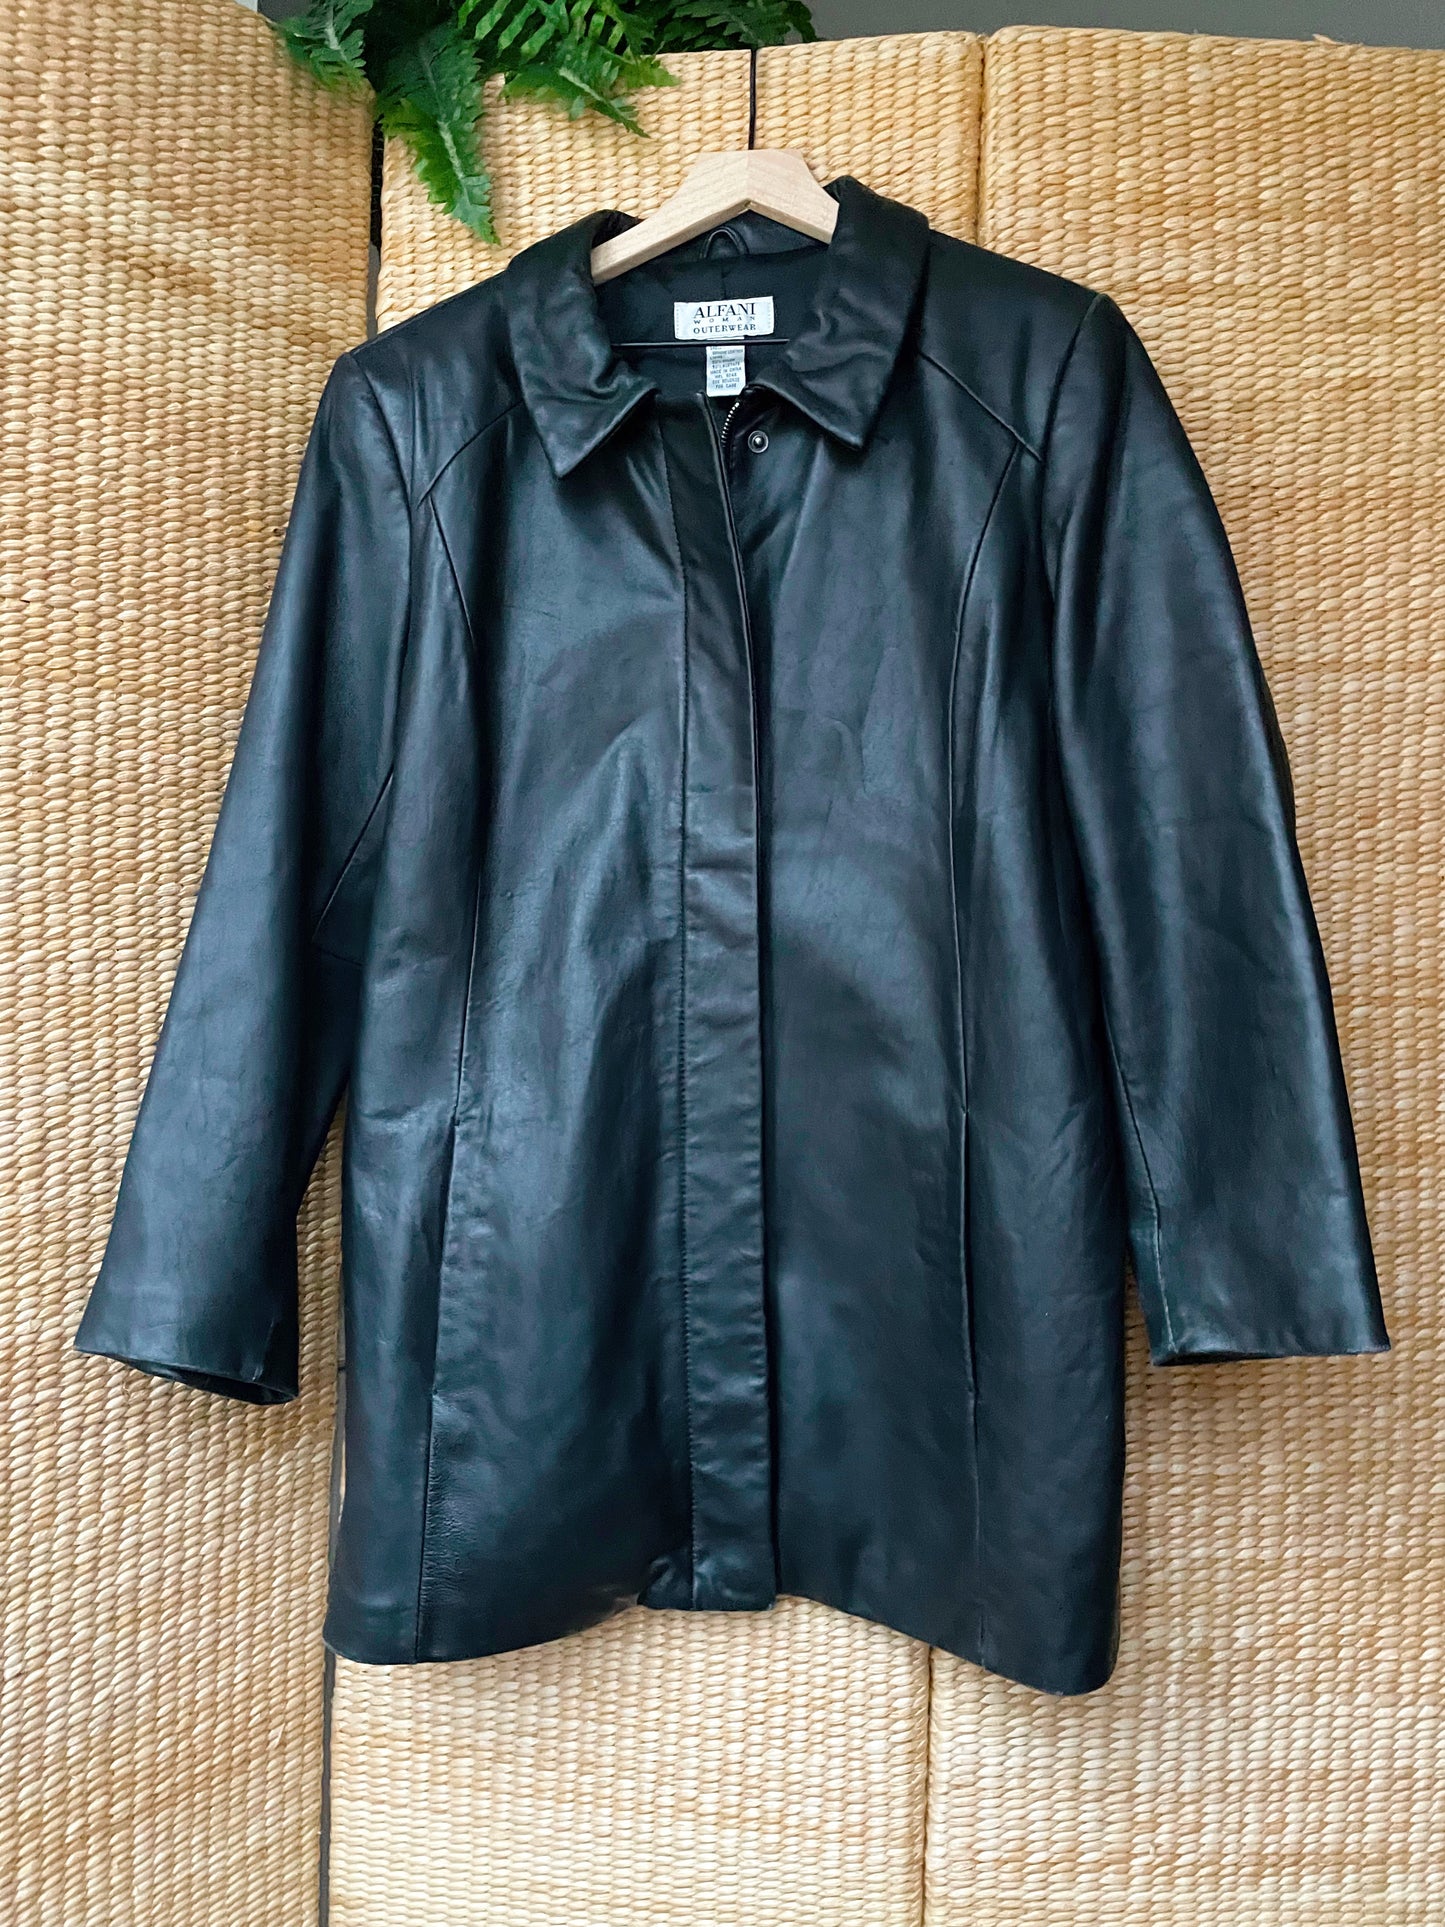 Alfani Black Leather Jacket